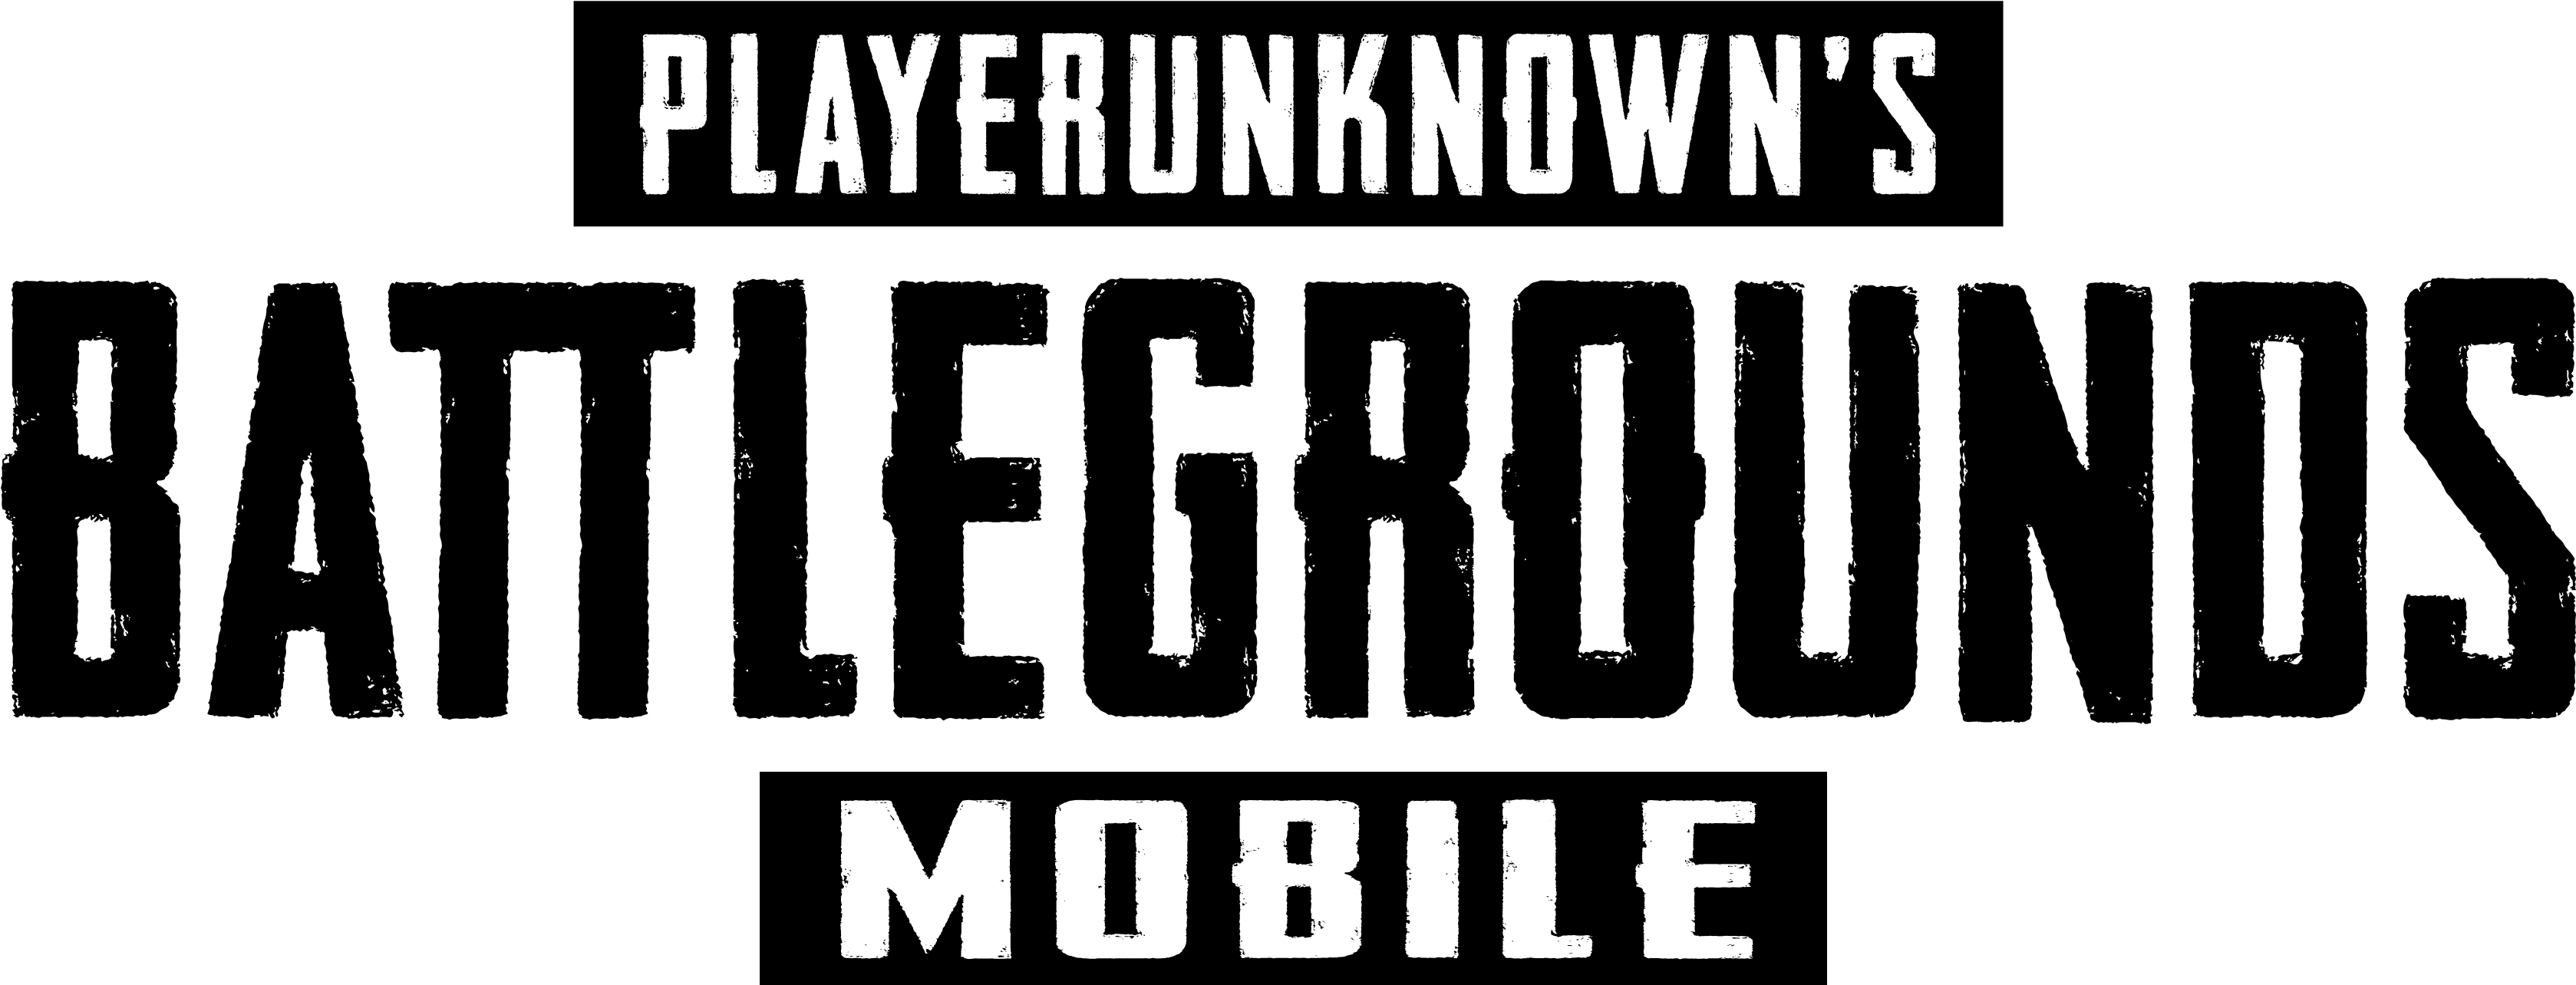 Pubg logo фото 68